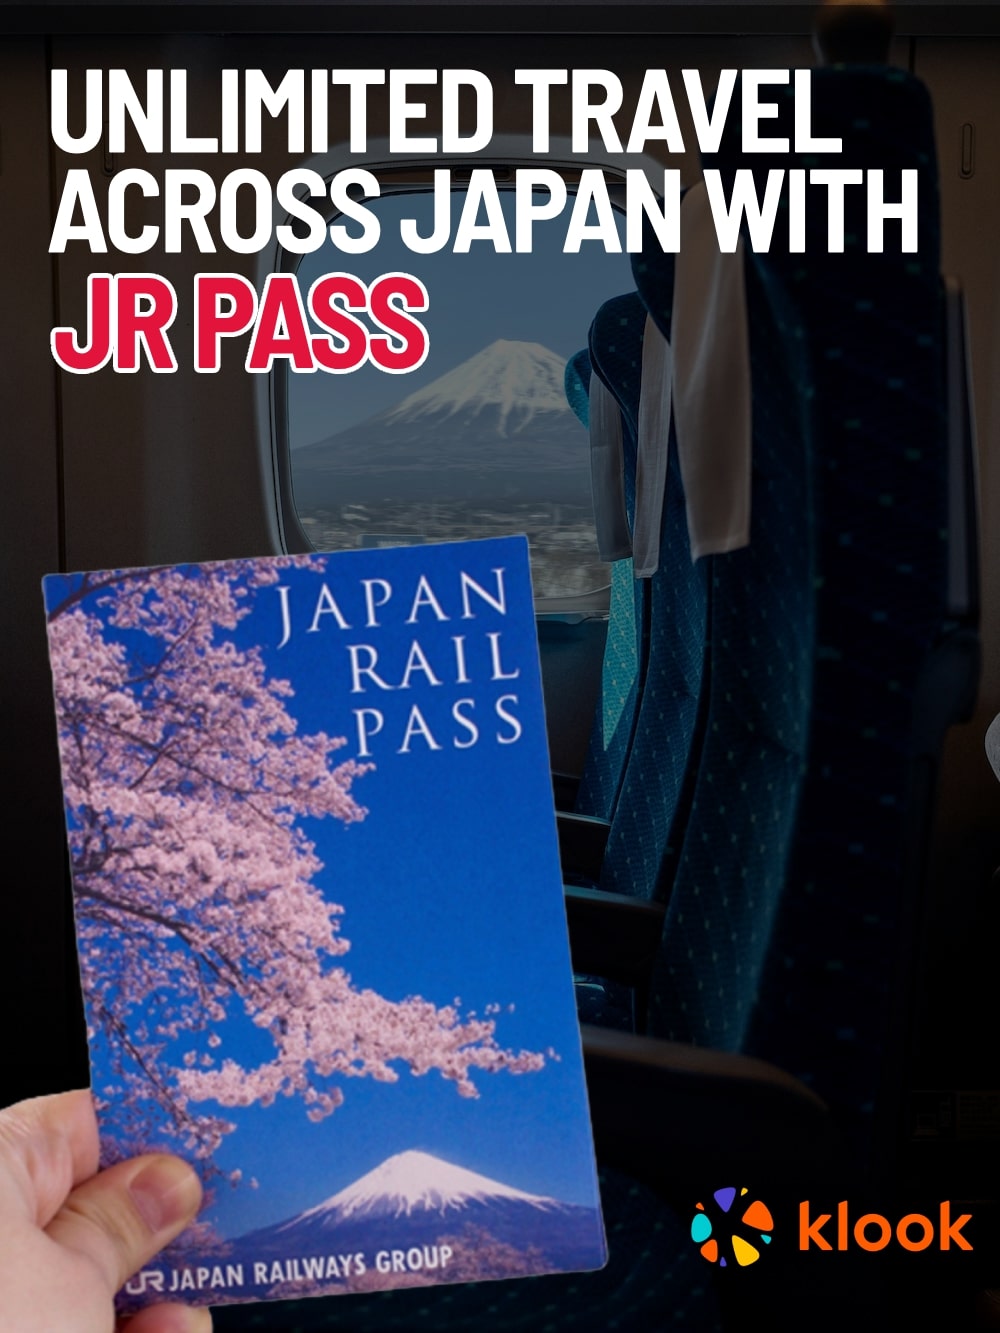 Japan rail pass banner